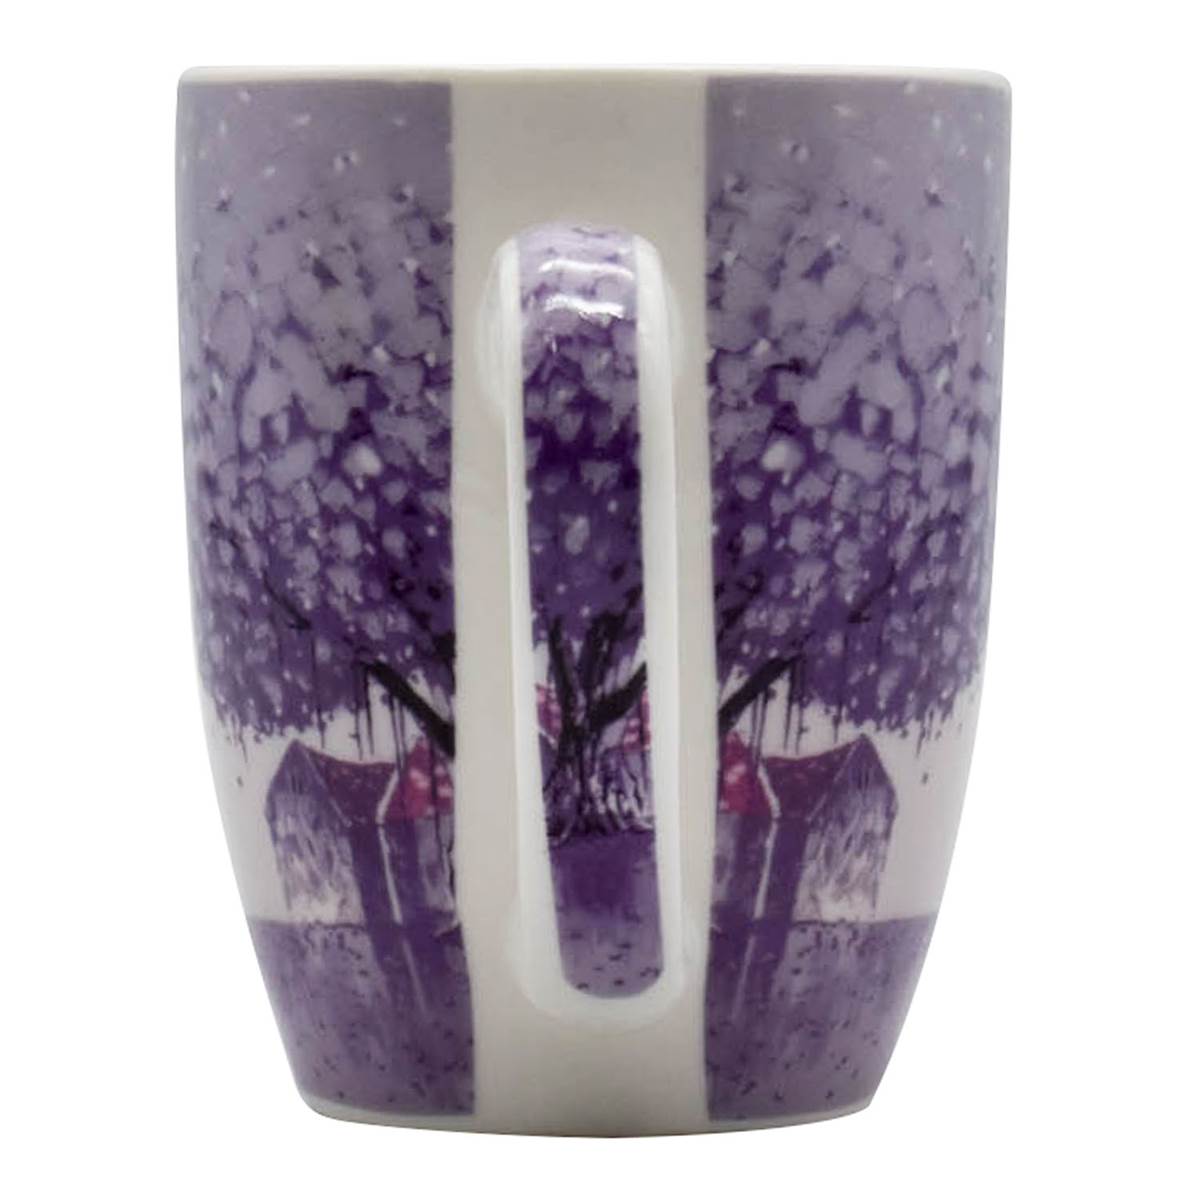 Printed Ceramic Coffee or Tea Mug with handle - 325ml (BPM2633-B)